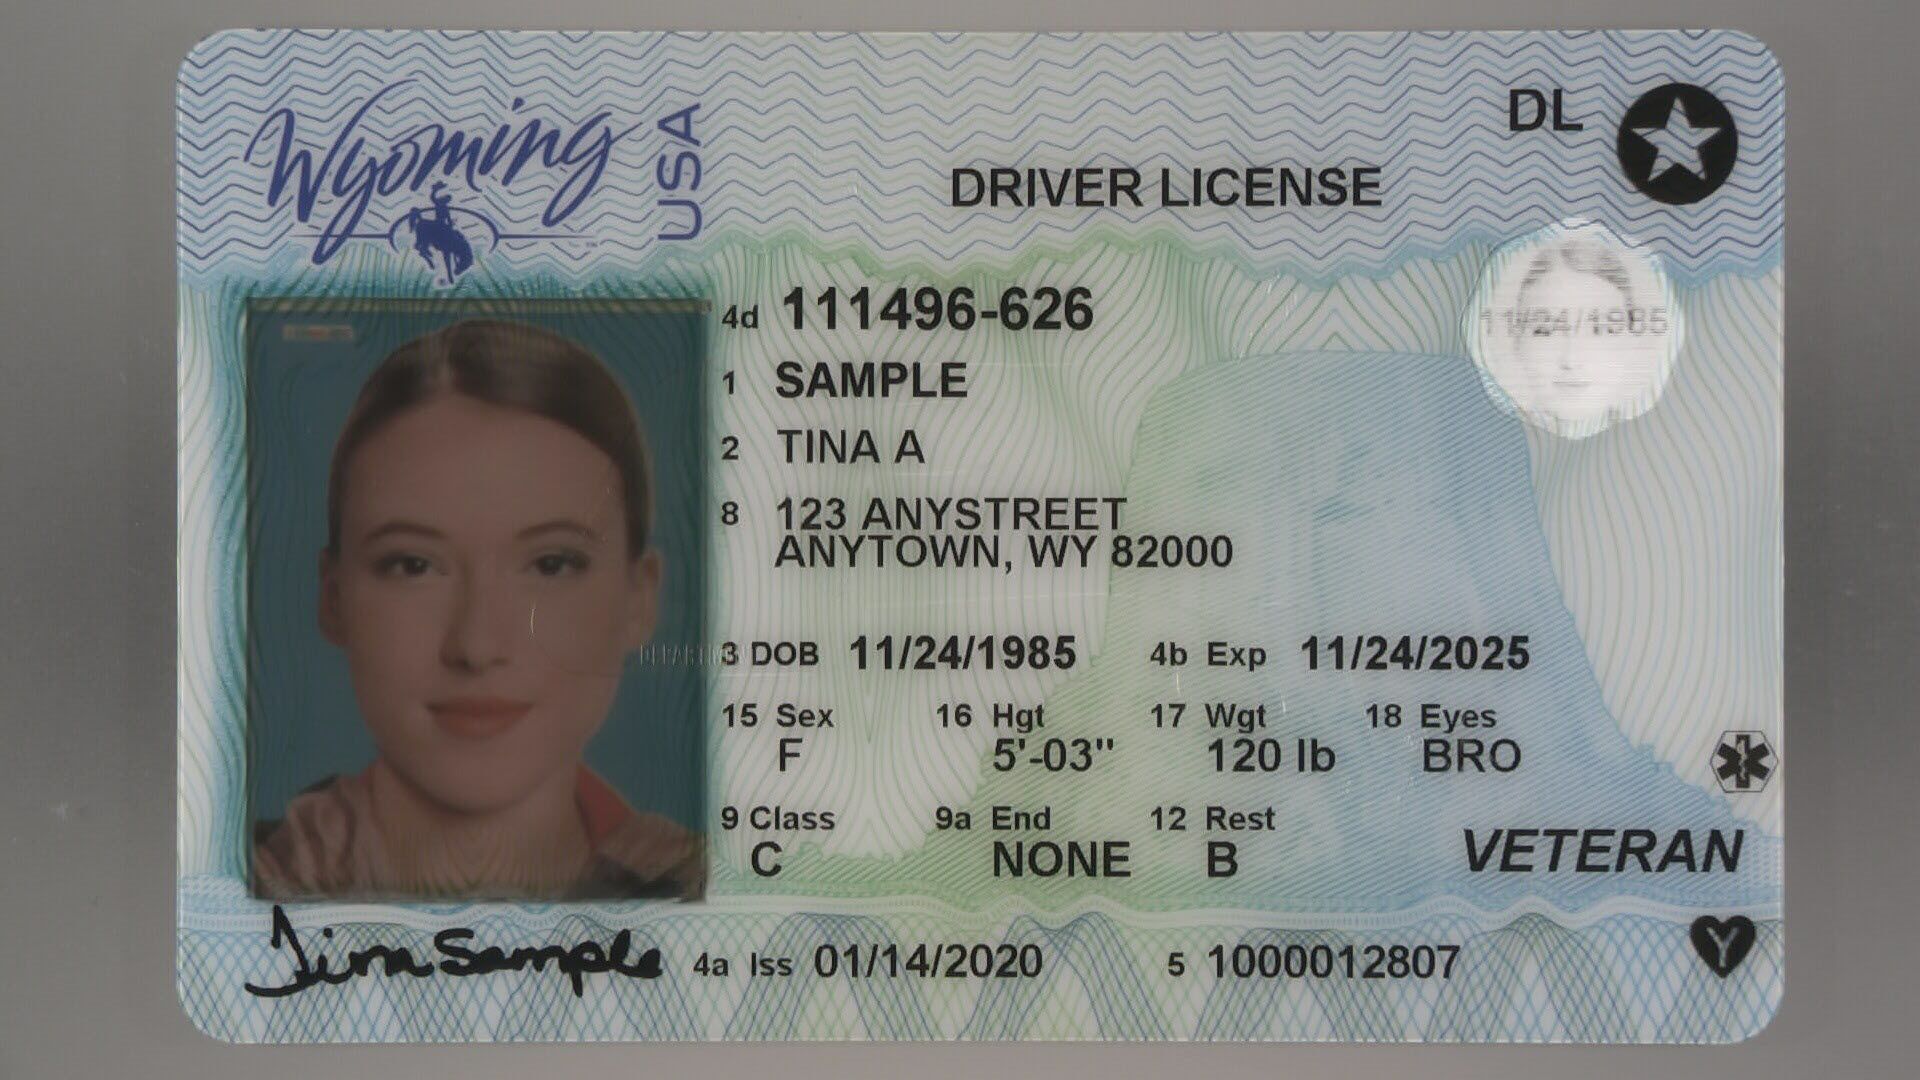 South Dakota fake id